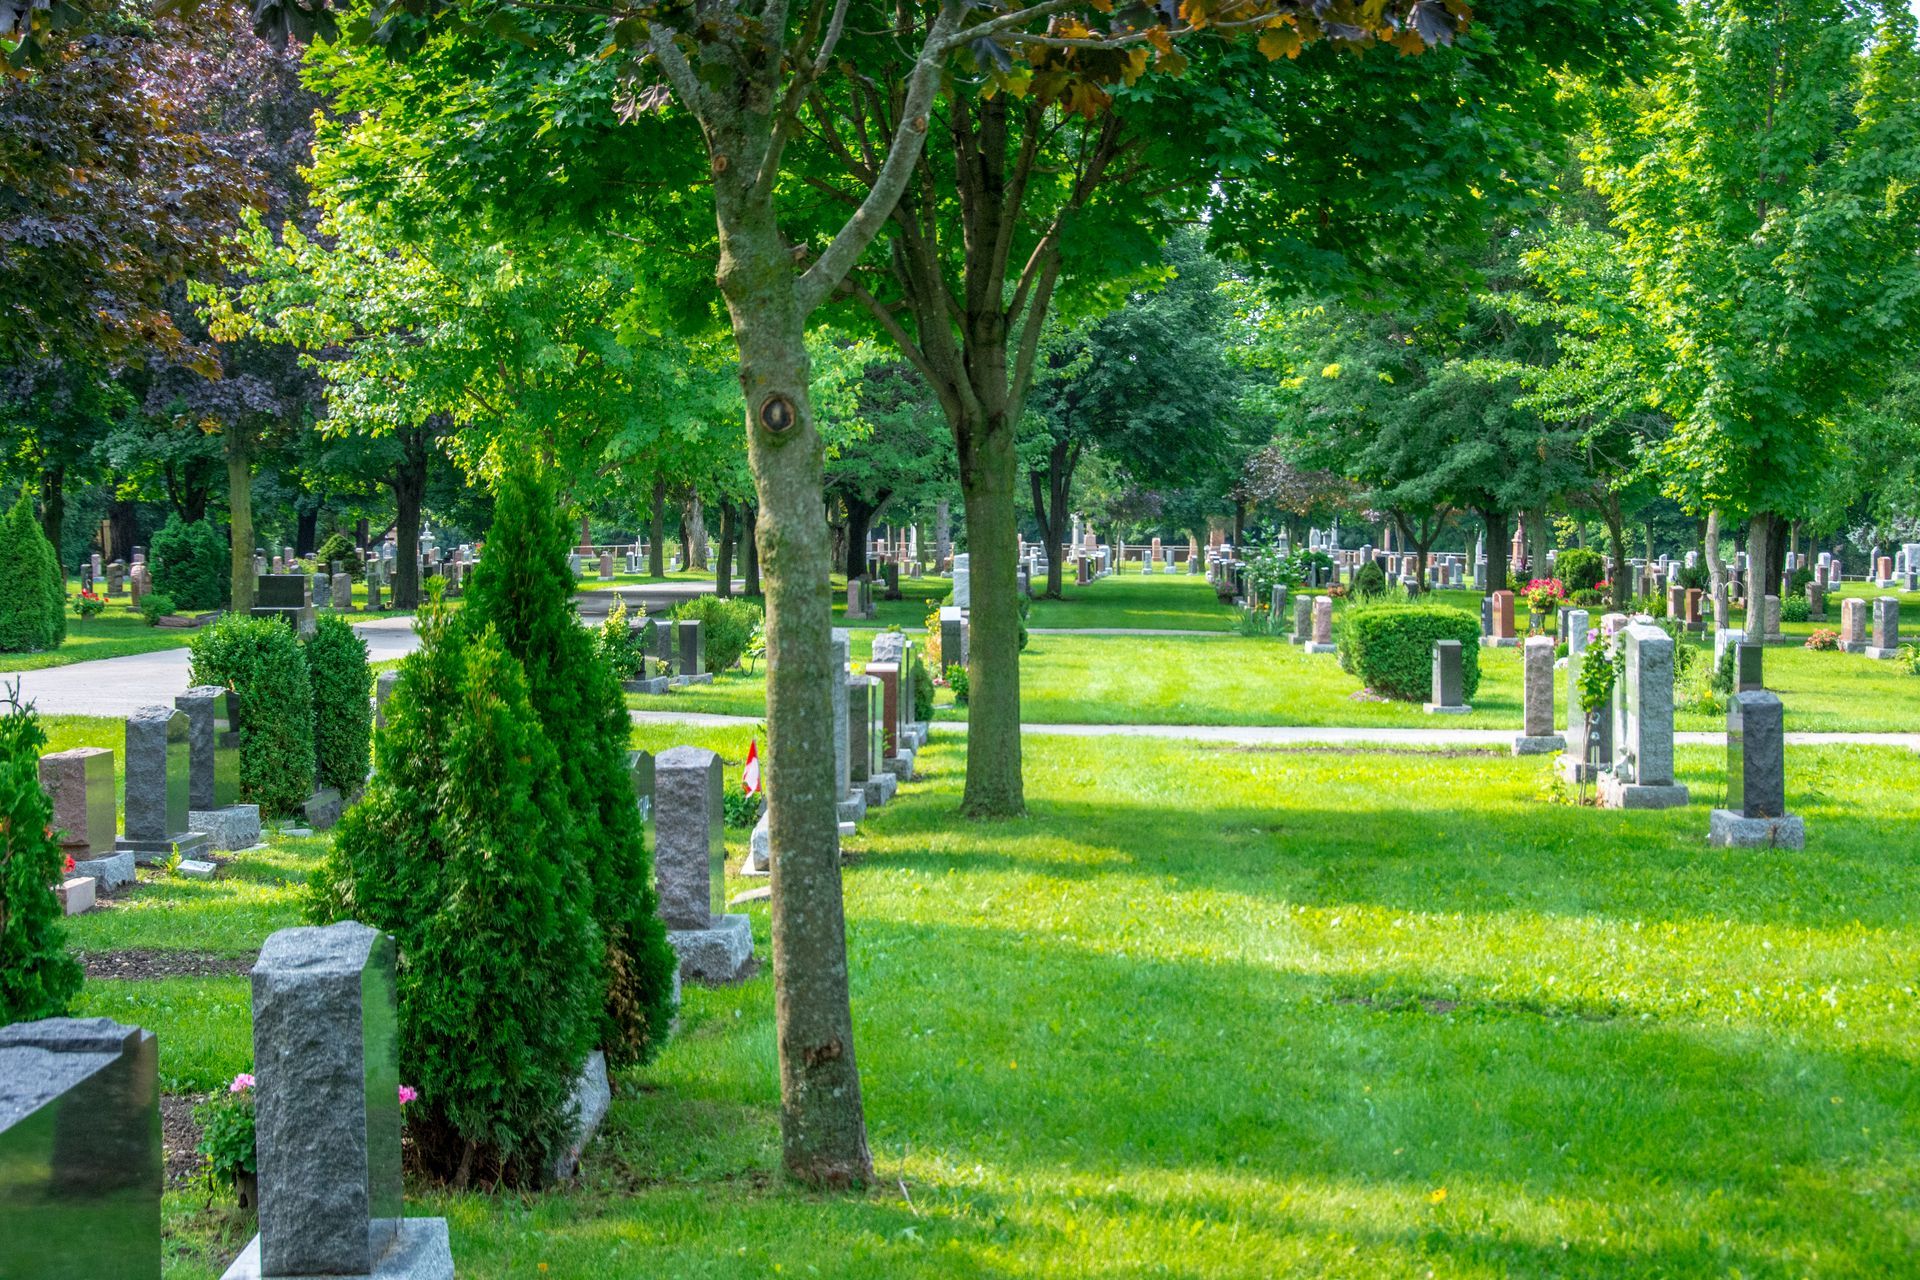 Graveyard Lawn Care Services